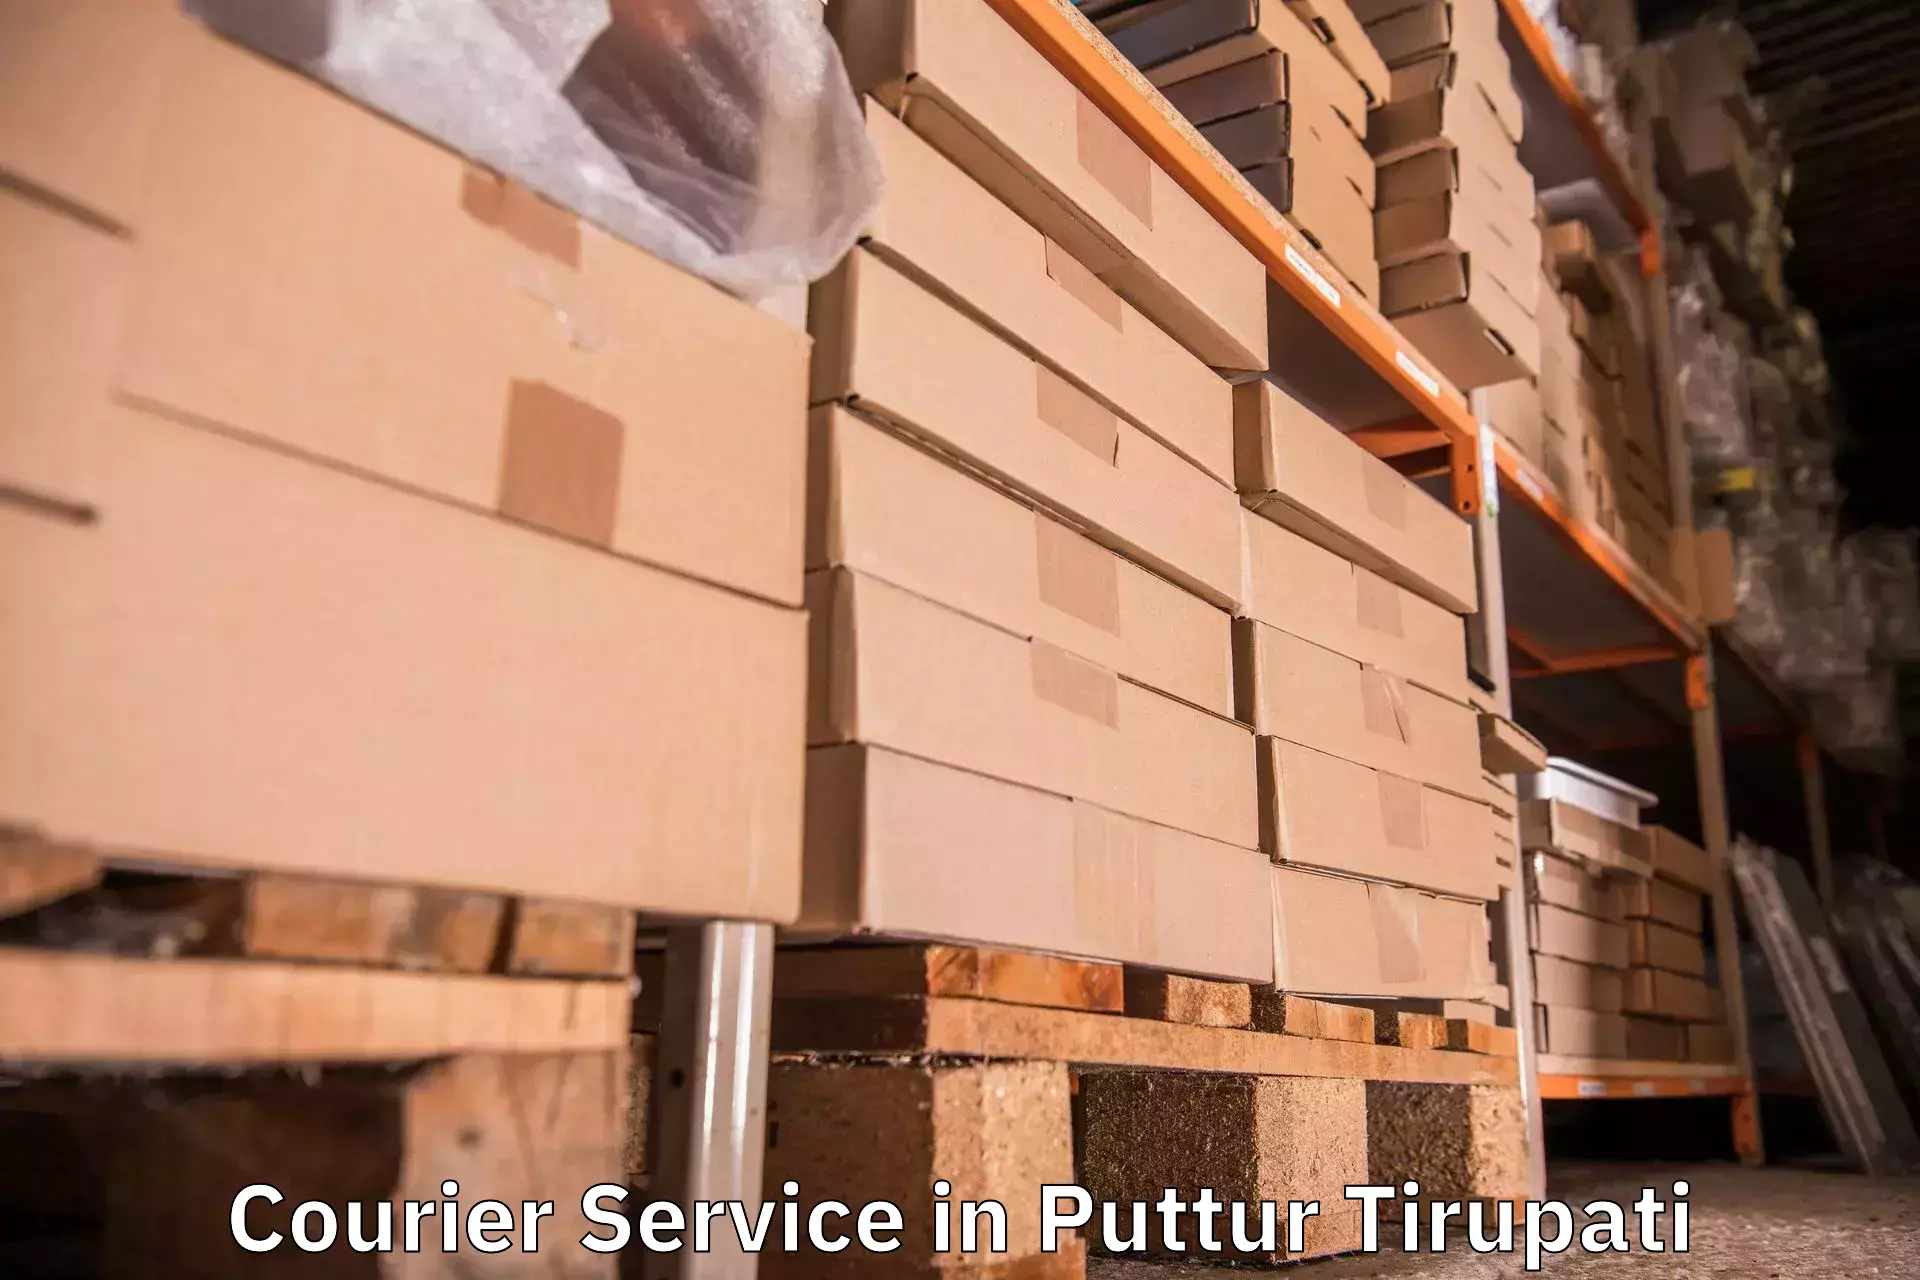 Courier service efficiency in Puttur Tirupati